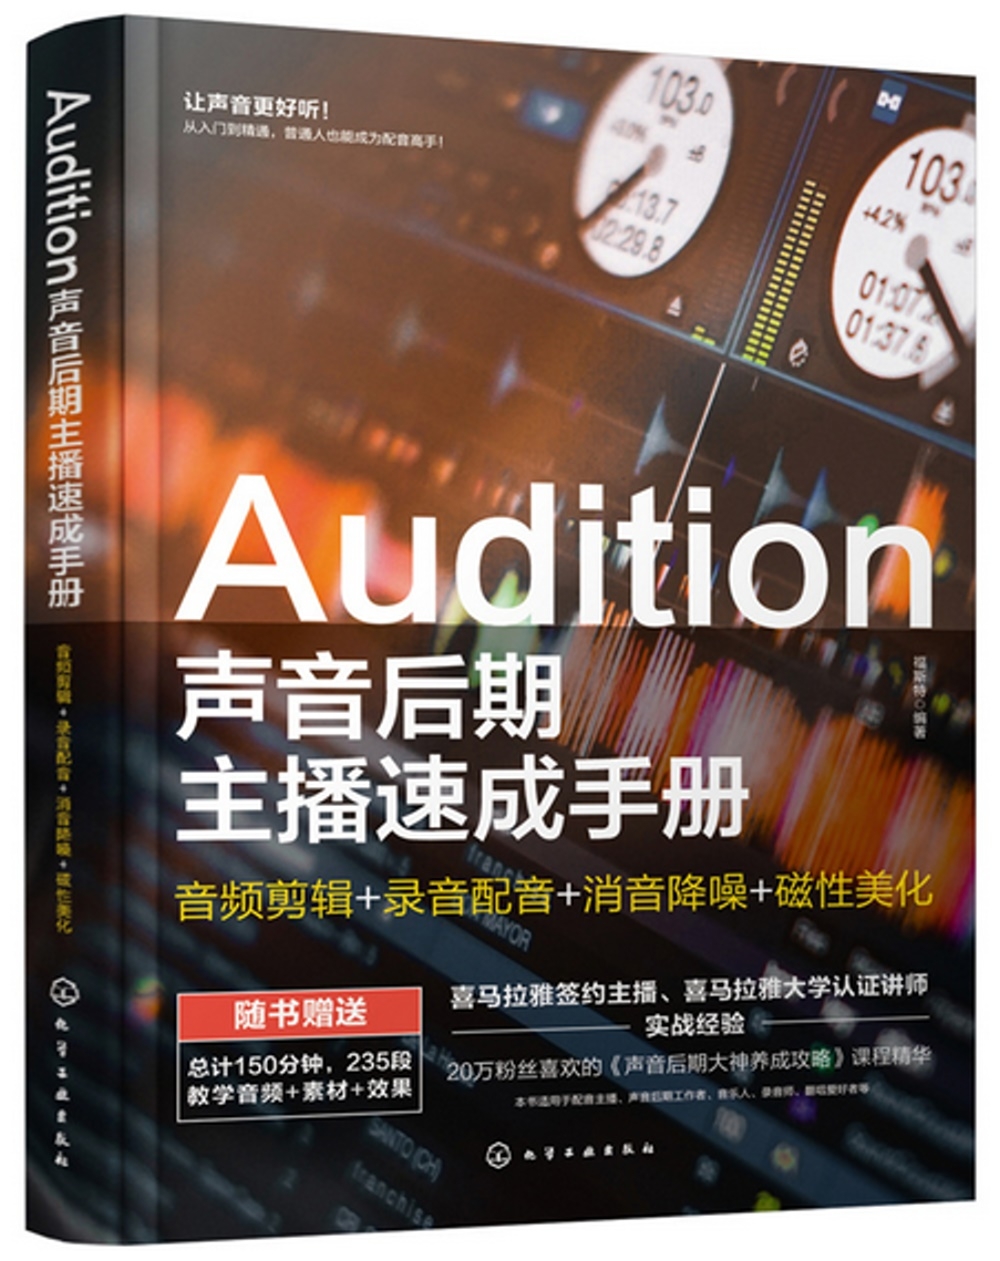 Audition聲音後期主播速成手冊：音頻剪輯+錄音配音+消音降噪+磁性美化